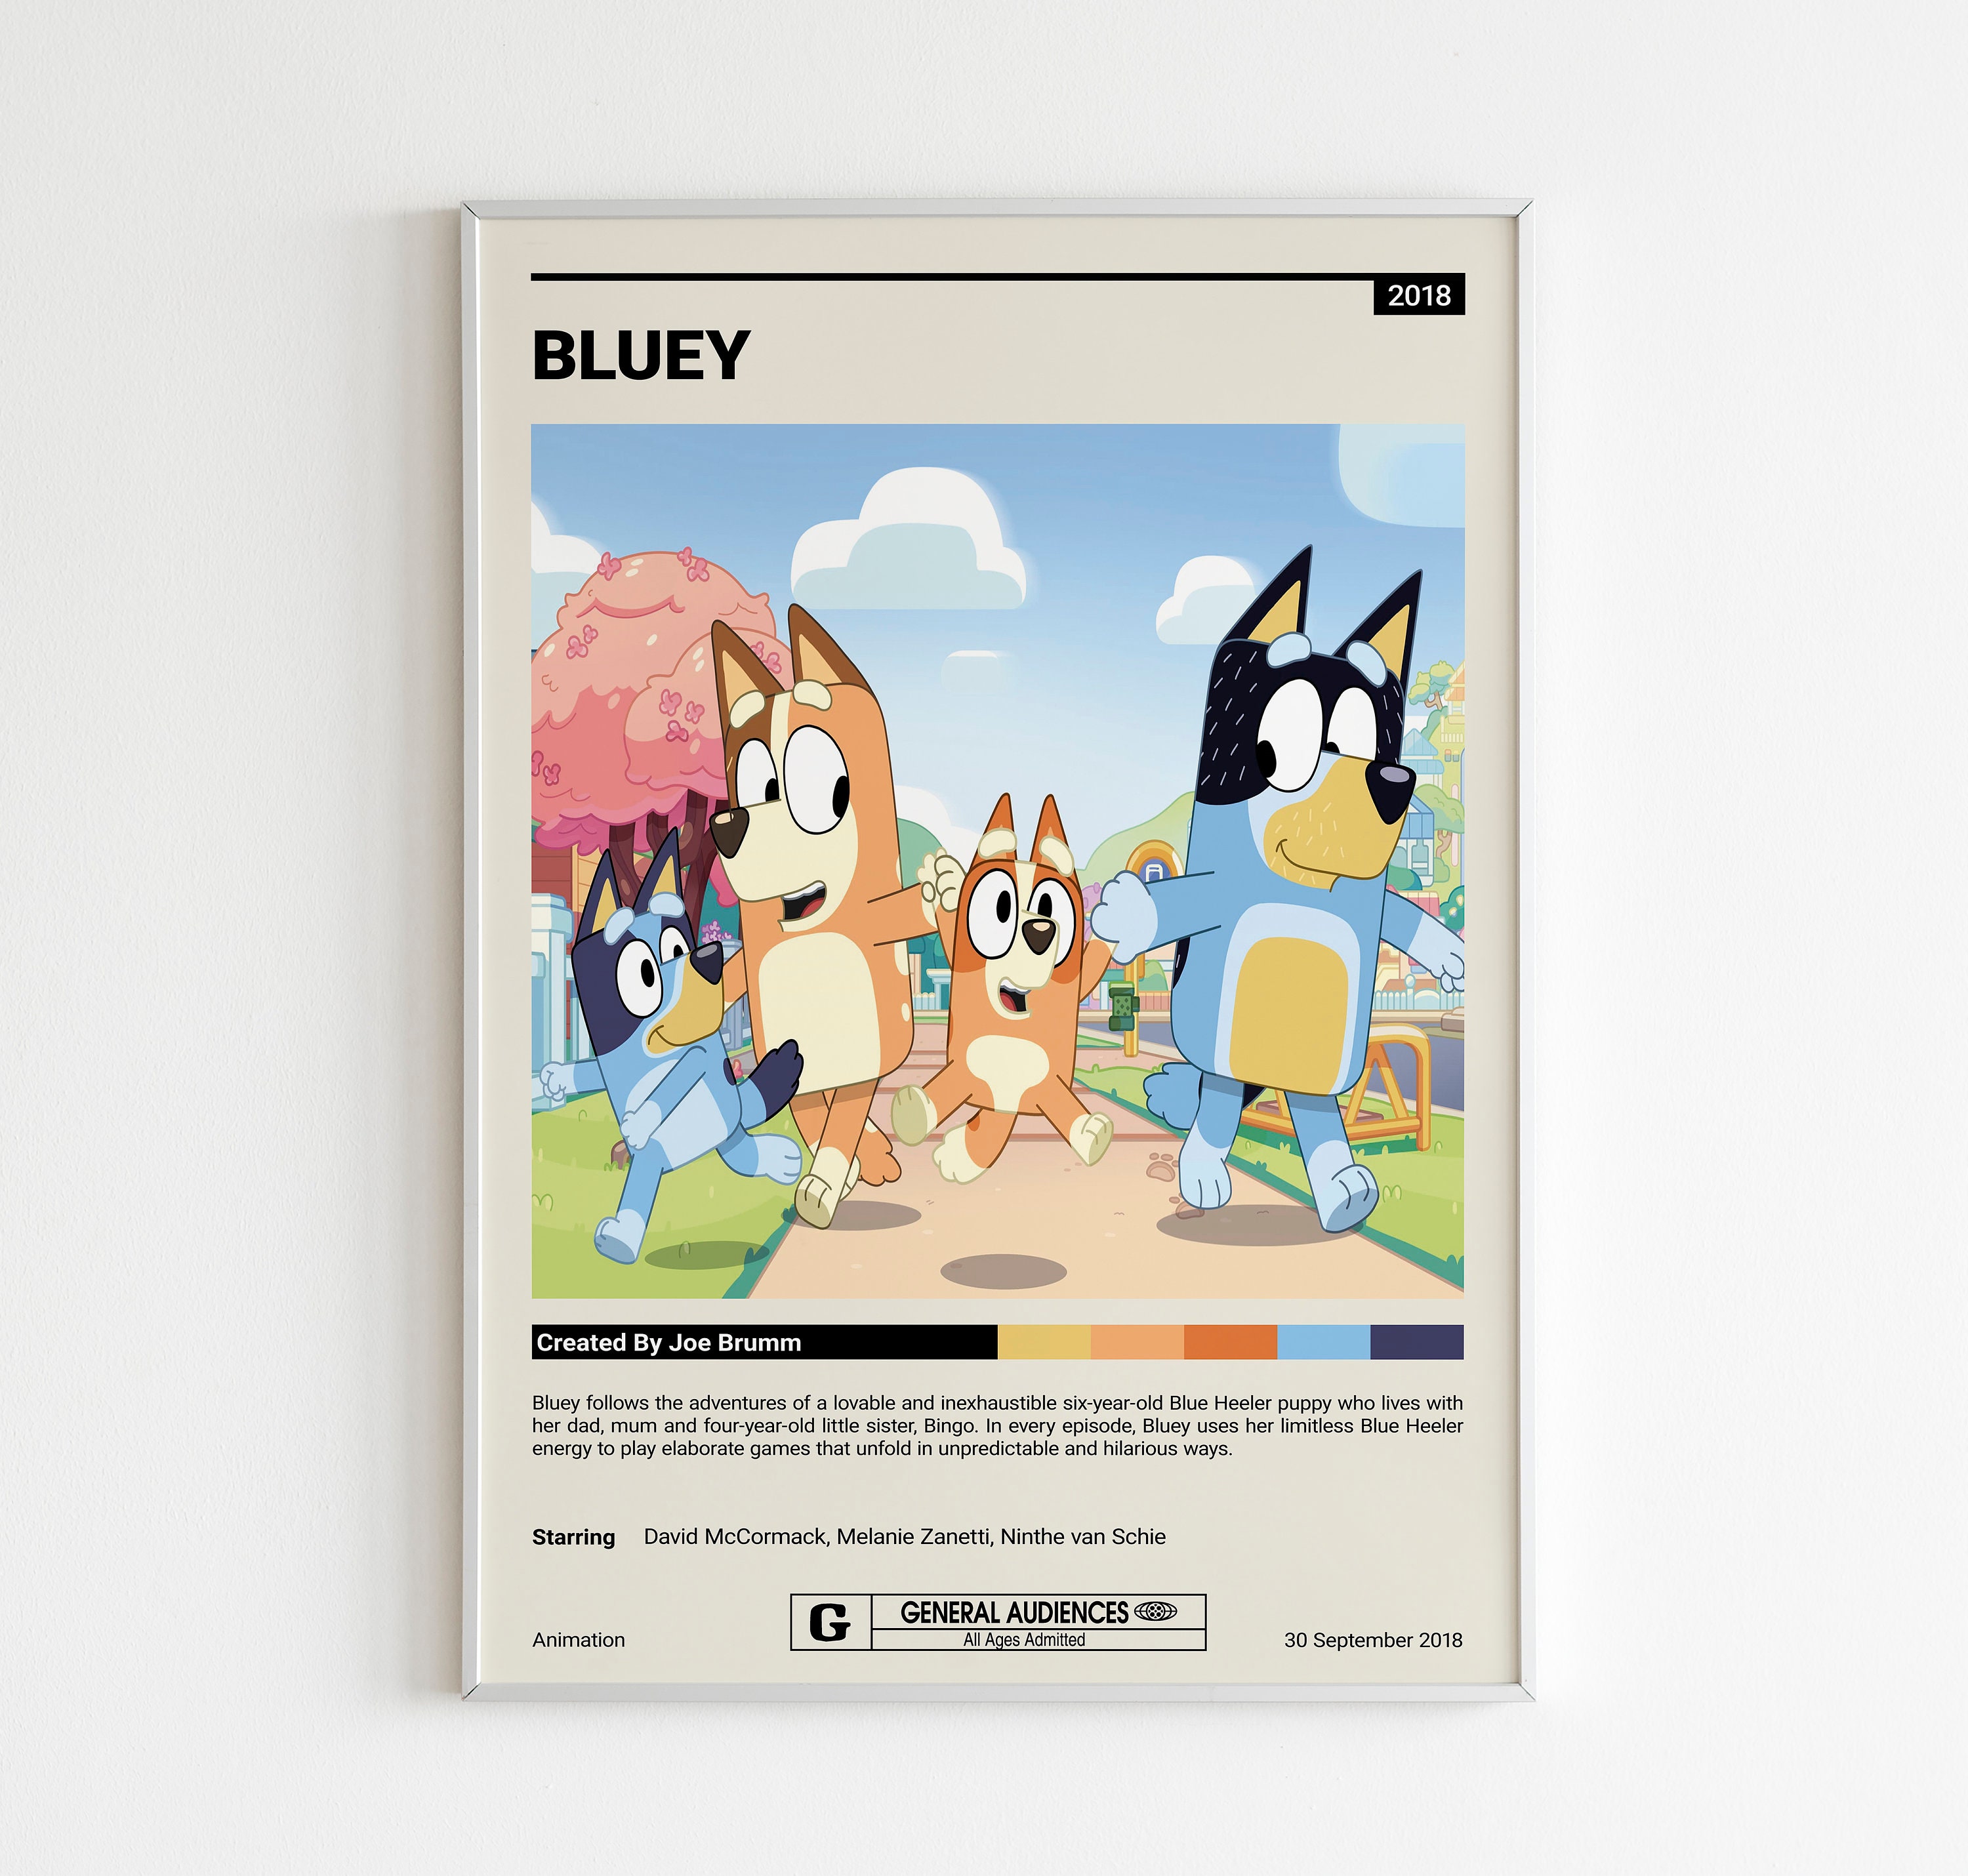  BigWig Prints Bluey Poster - Bluey Birthday Decorations, Bluey  Birthday Party Supplies, Bluey Room, Bluey Wall Decal, Bluey Bedroom Decor,  Bluey Wall Art, Bluey Gift - 6 Pack (8x10”) Unframed: Posters